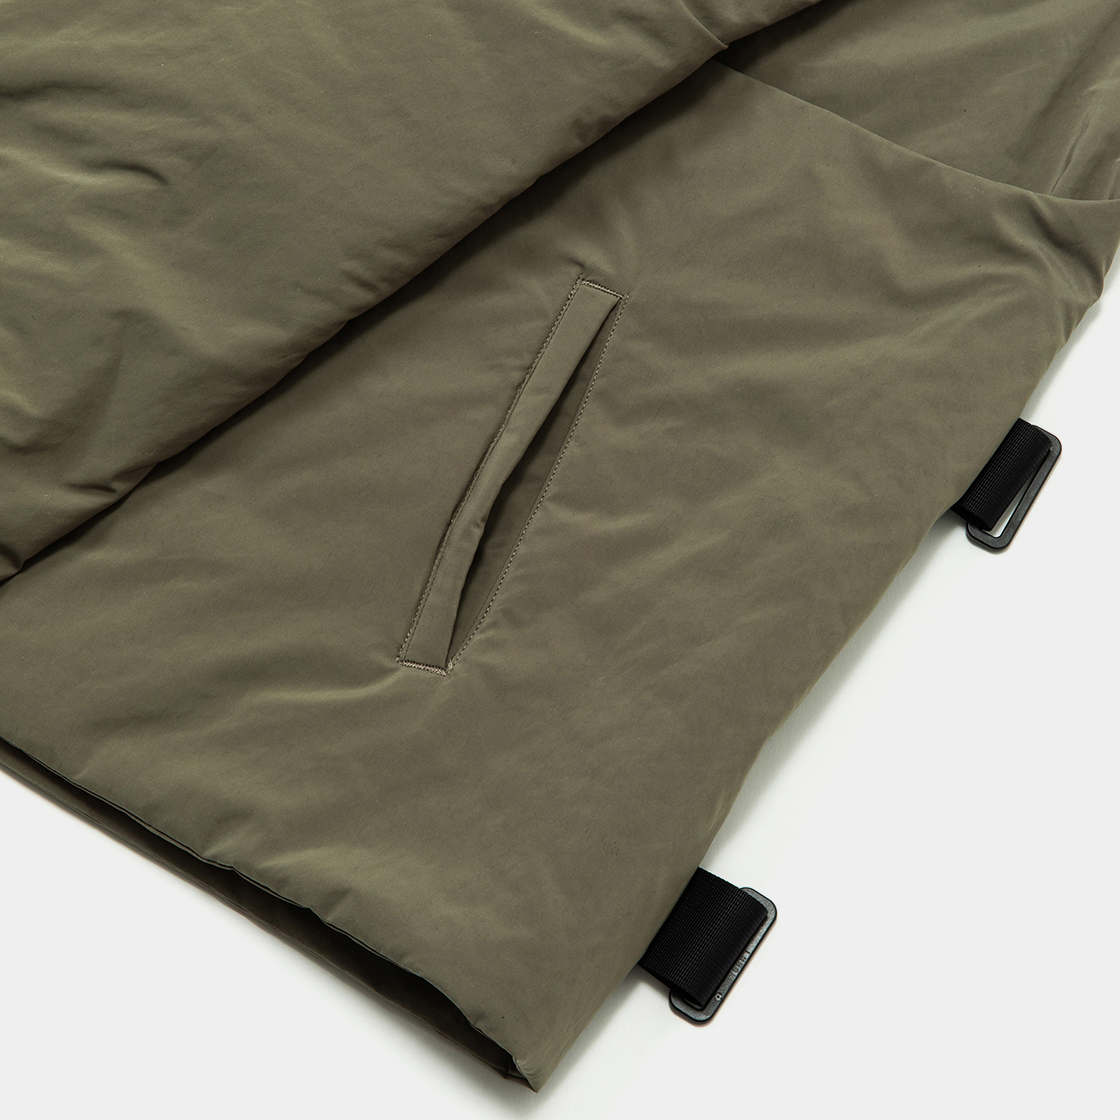 Padding Body Armor Vest / Khaki